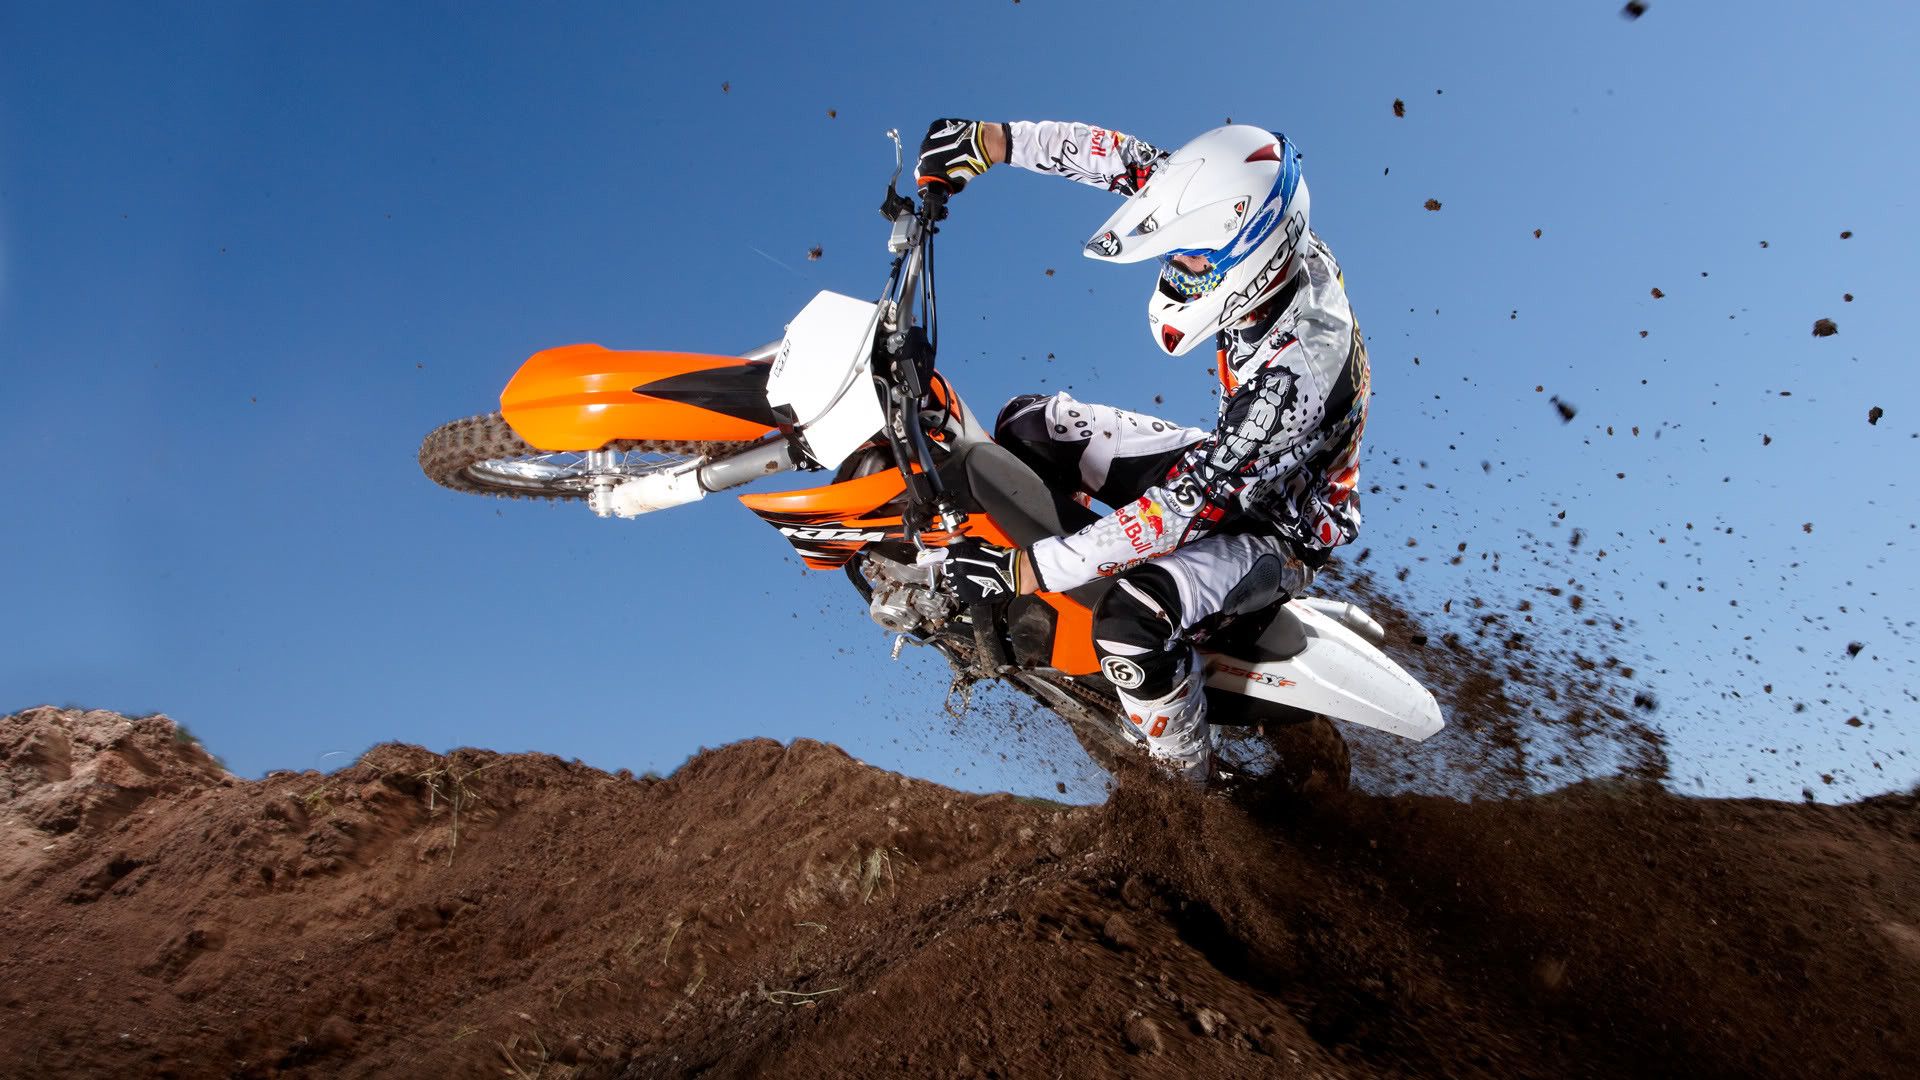 Wallpaper Man Riding Motocross Dirt Bike on Brown Sand During Daytime  Background  Download Free Image